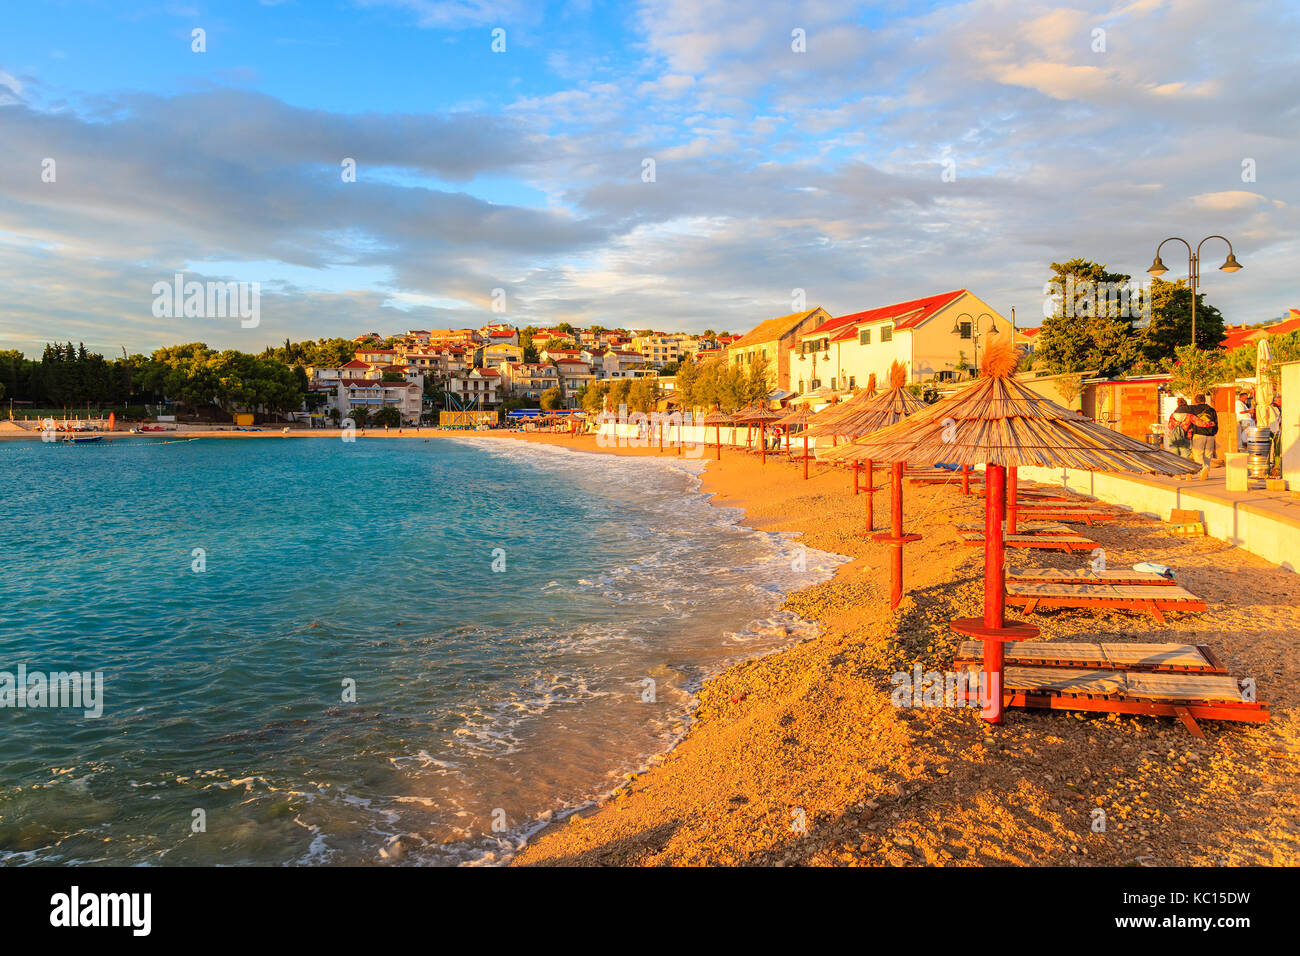 Beach view at sunset time in Primosten town, Dalmatia, Croatia Stock Photo